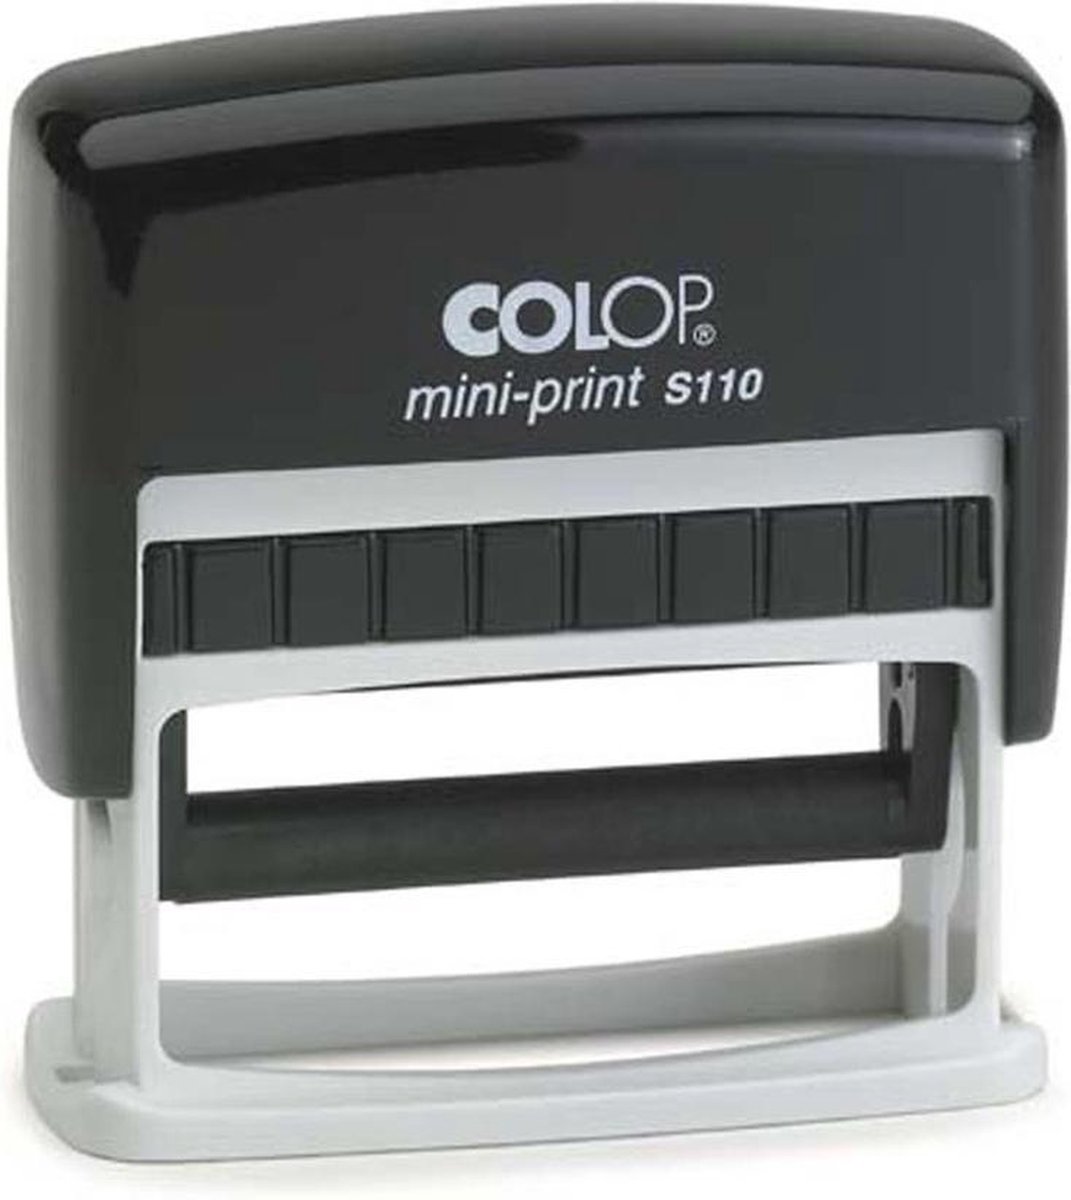 Colop Printer S110 - Stempels - Stempels volwassenen - Gratis verzending